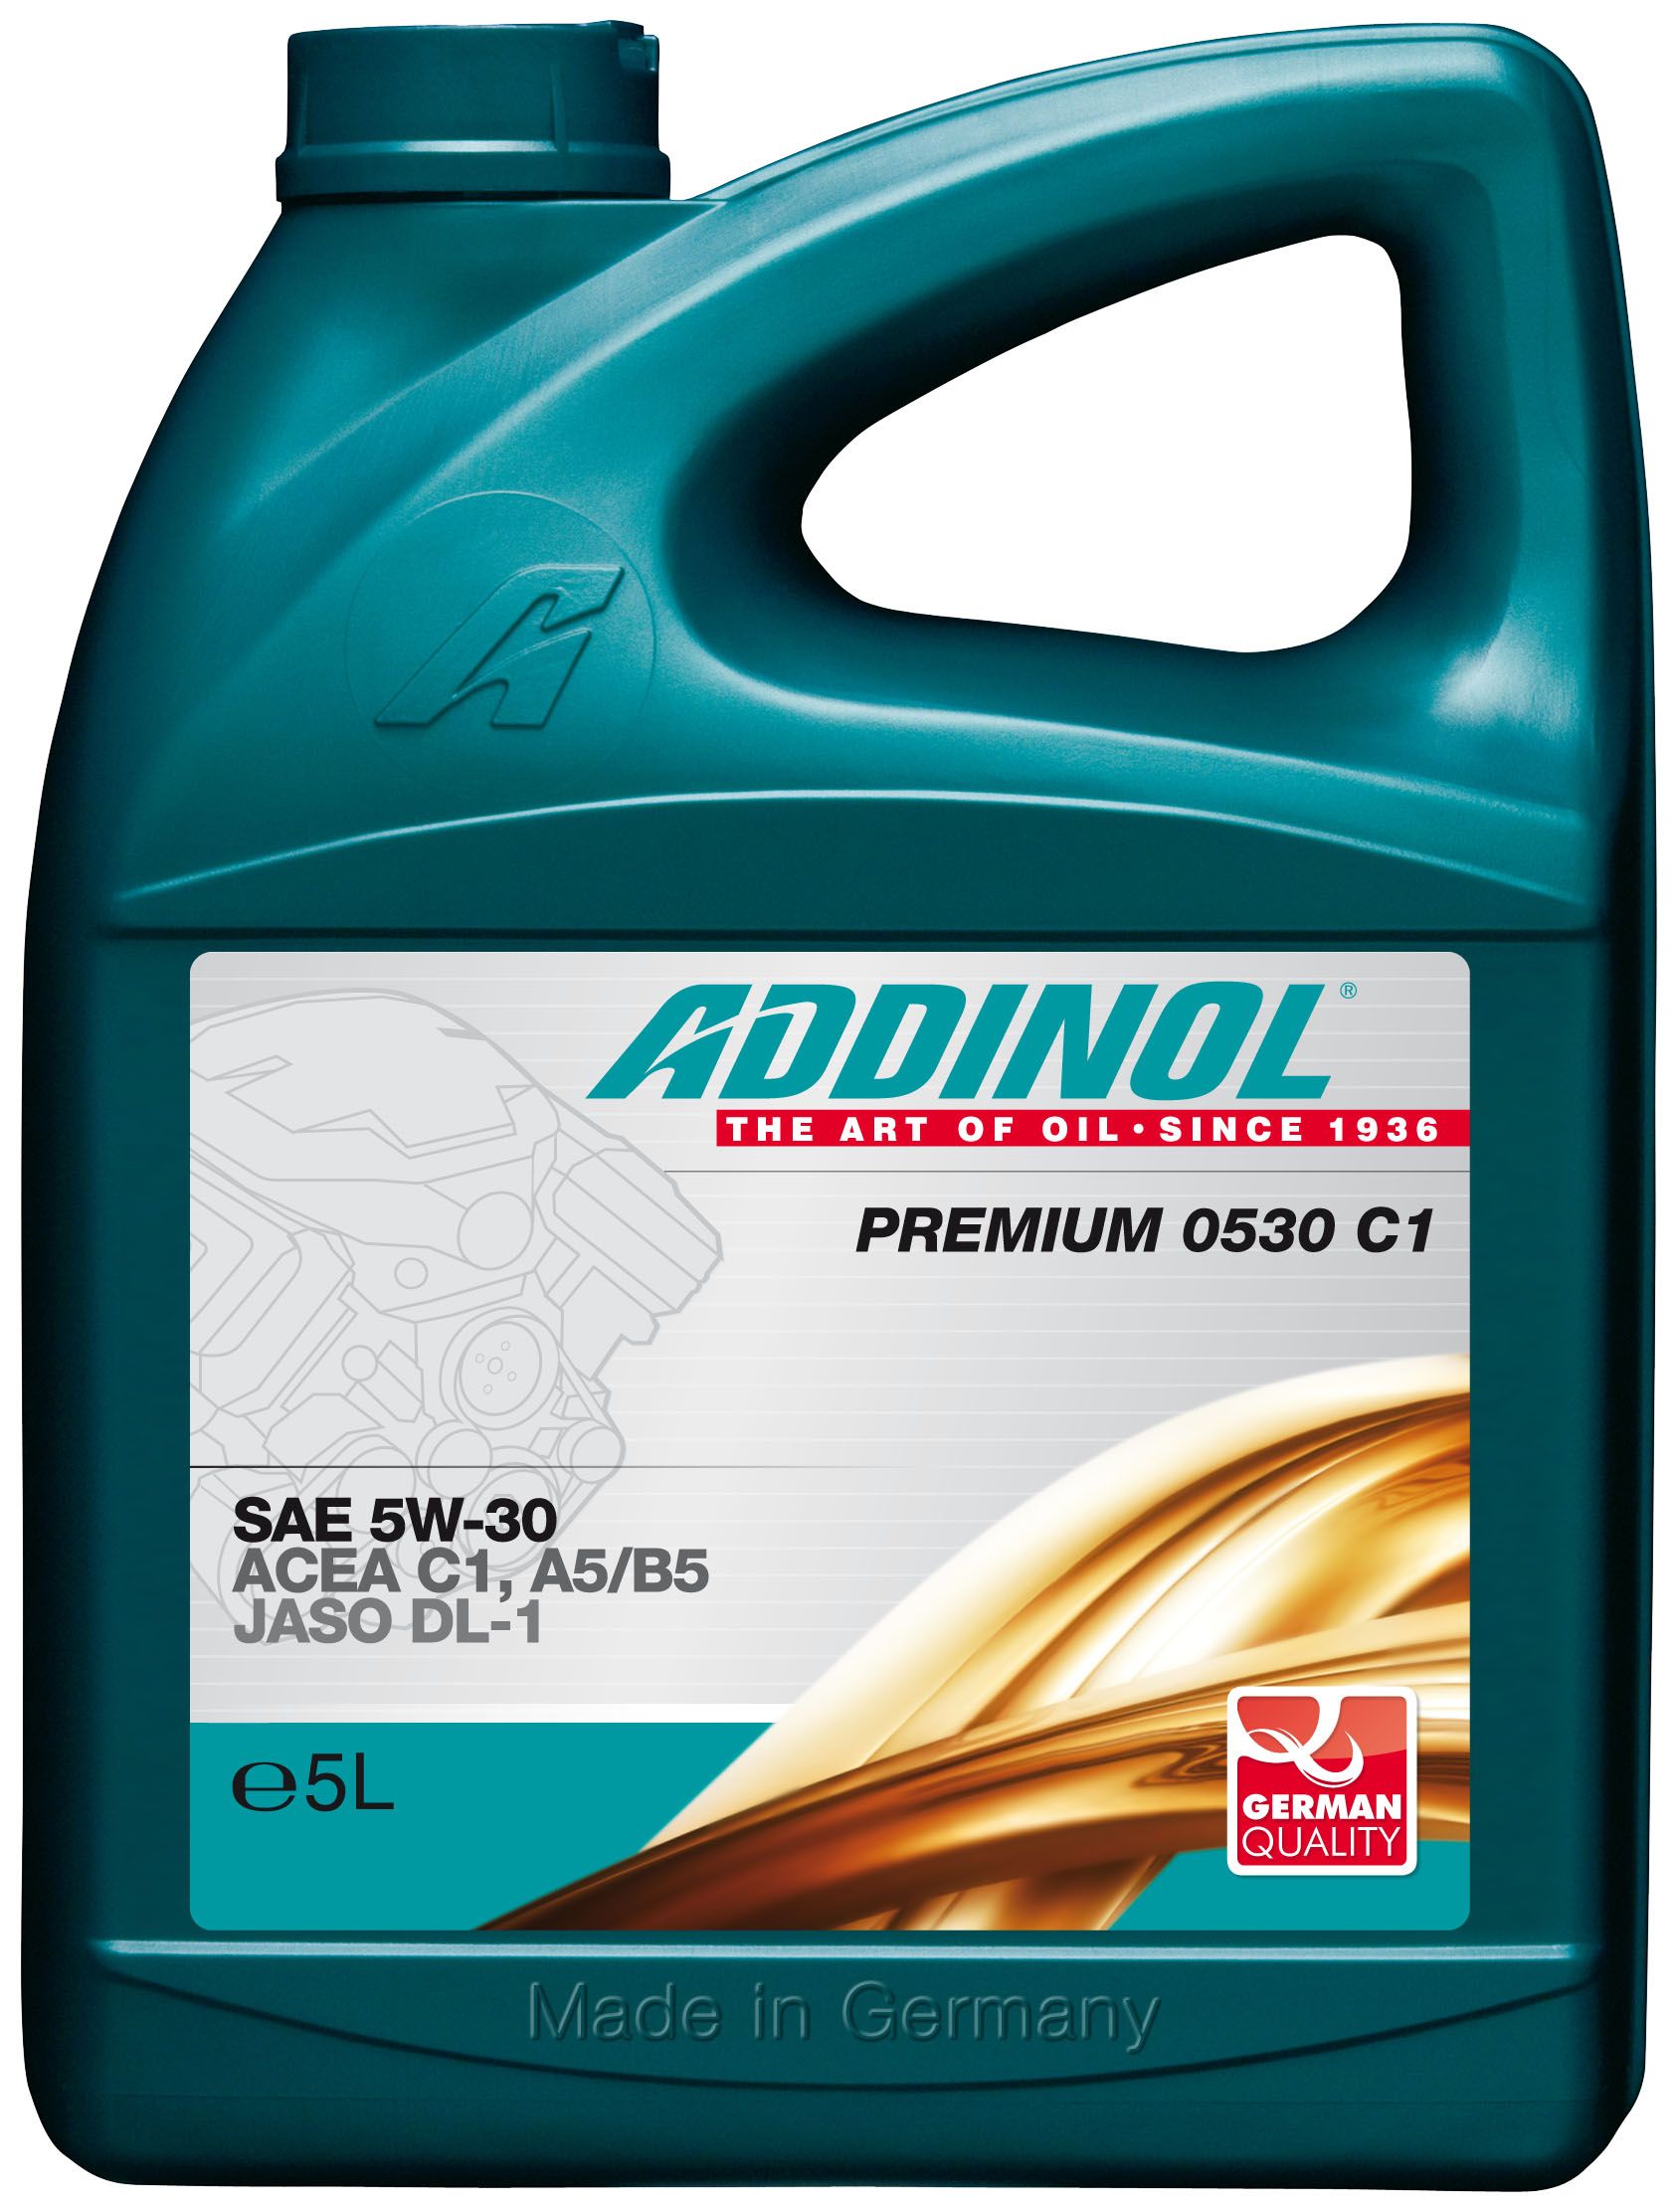 Масла моторные марки 5w30. Addinol 4014766241108 масло моторное синтетическое "Giga Light (Motorenol) MV 0530 ll 5w-30", 5л. Addinol Premium 0530 c3-DX 5w-30 5л. Addinol Diesel Longlife MD 1548 (SAE 15w-40). Addinol Semi Synth 1040.